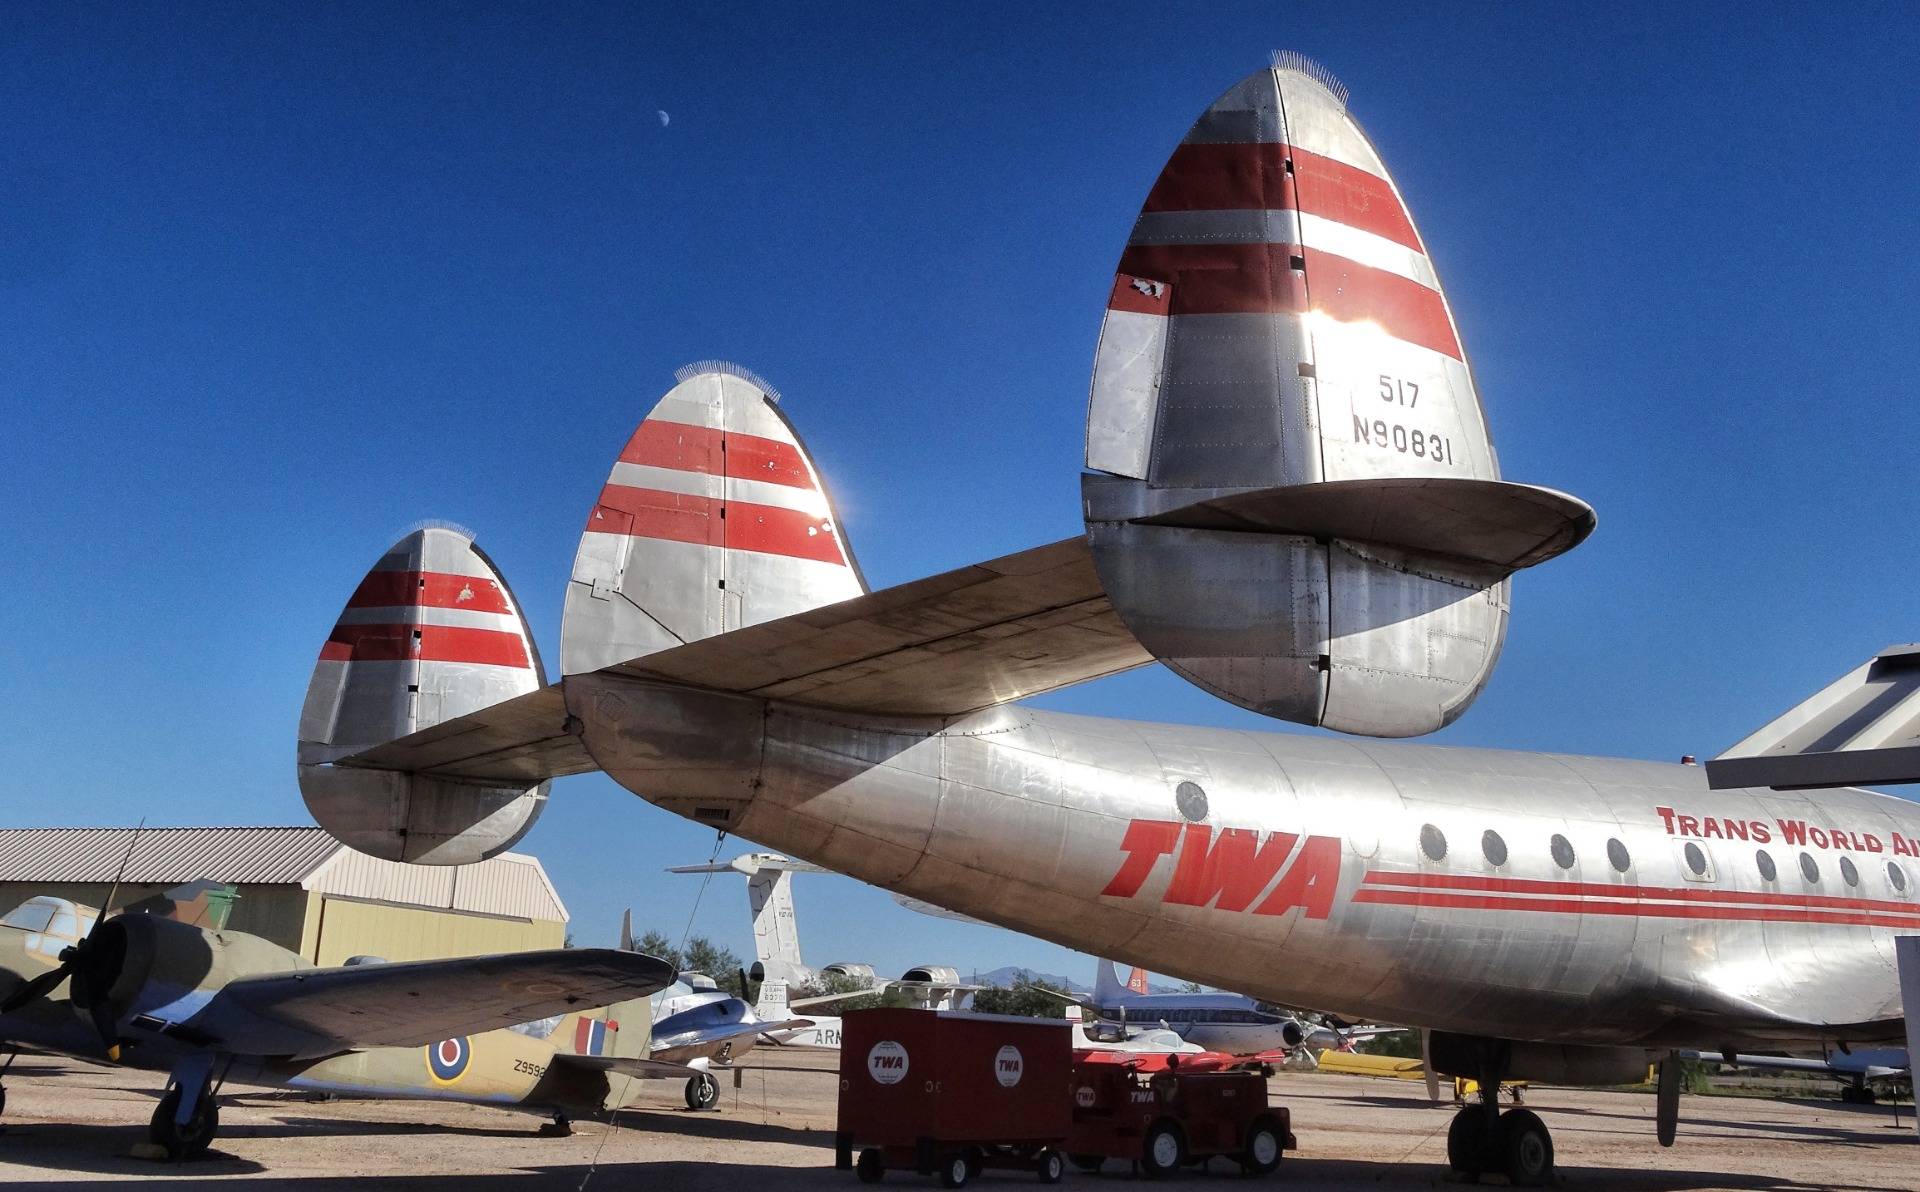 Traces of a forgotten era: A TWA plane.